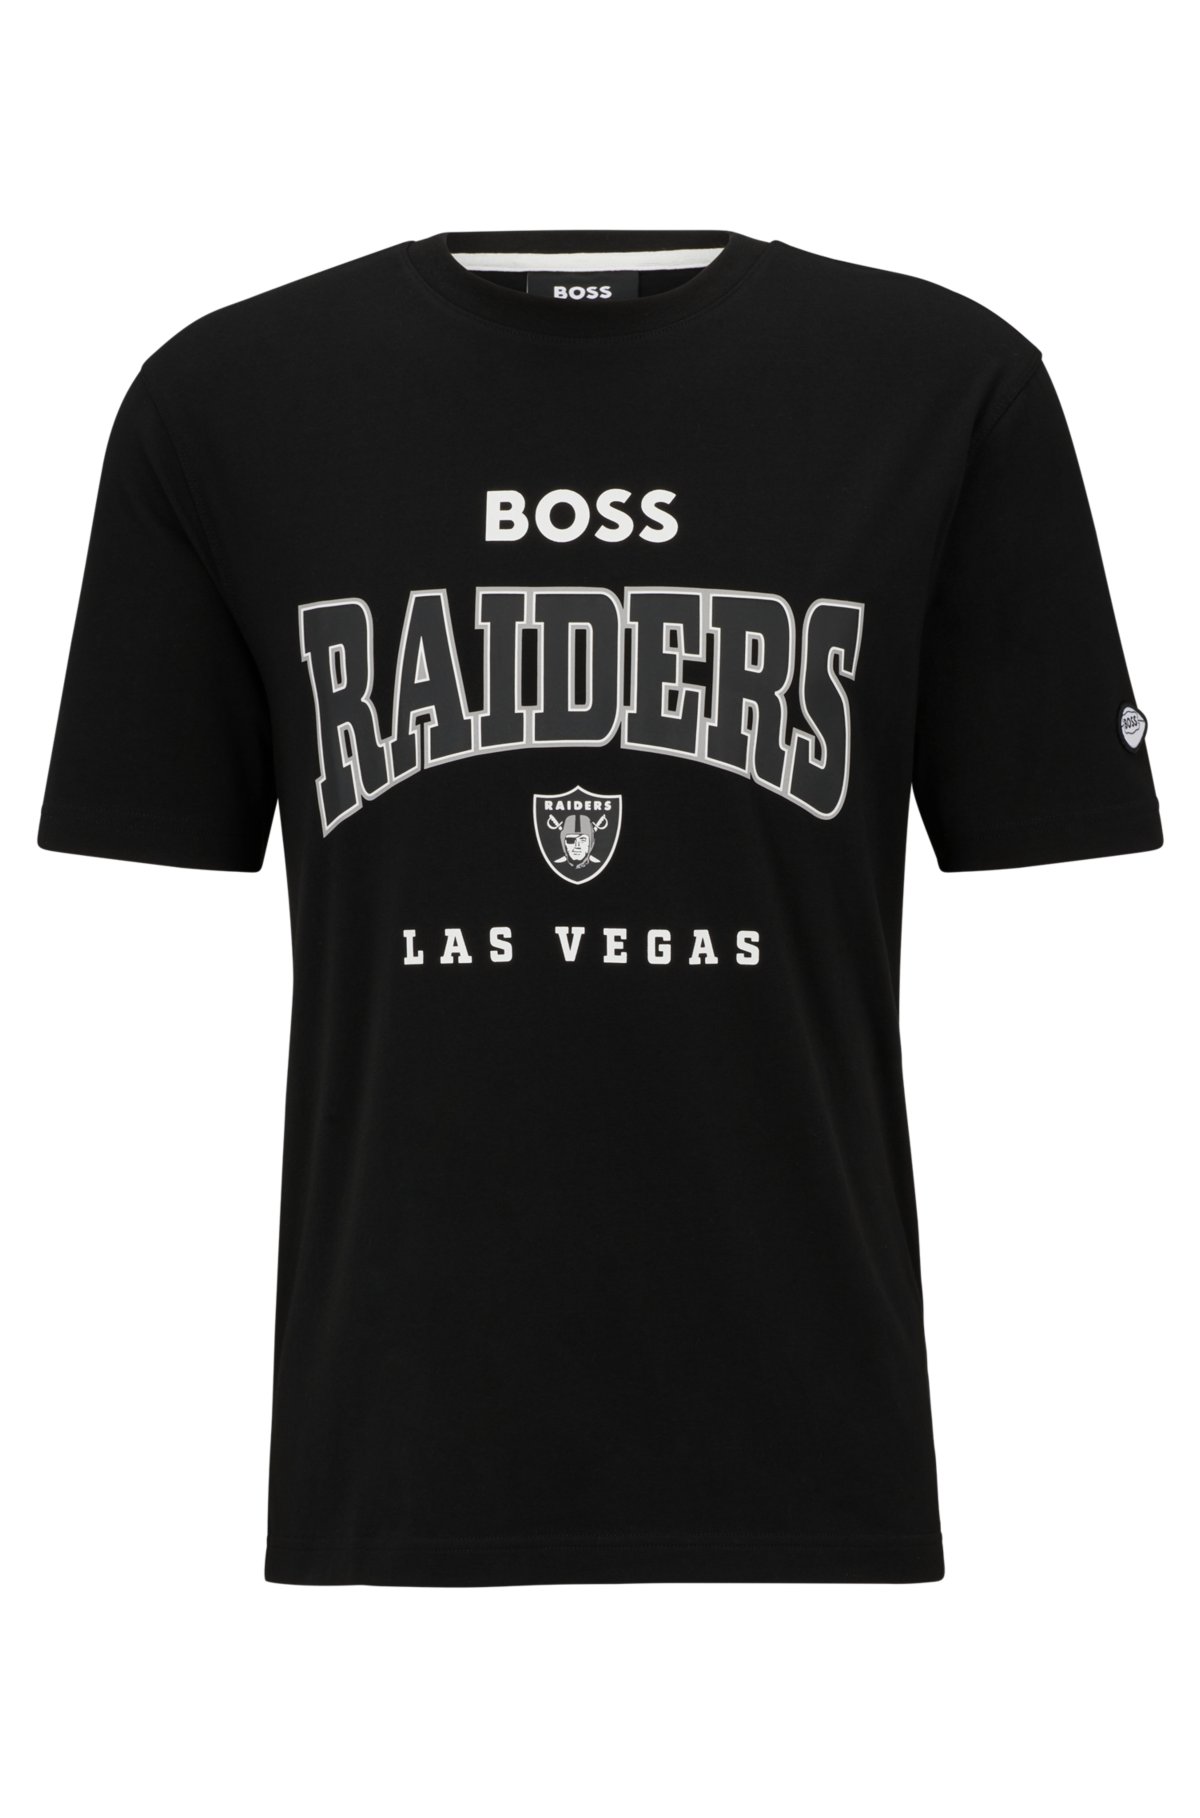 Las Vegas Raiders Women's Fade Route Tee - Vegas Sports Shop